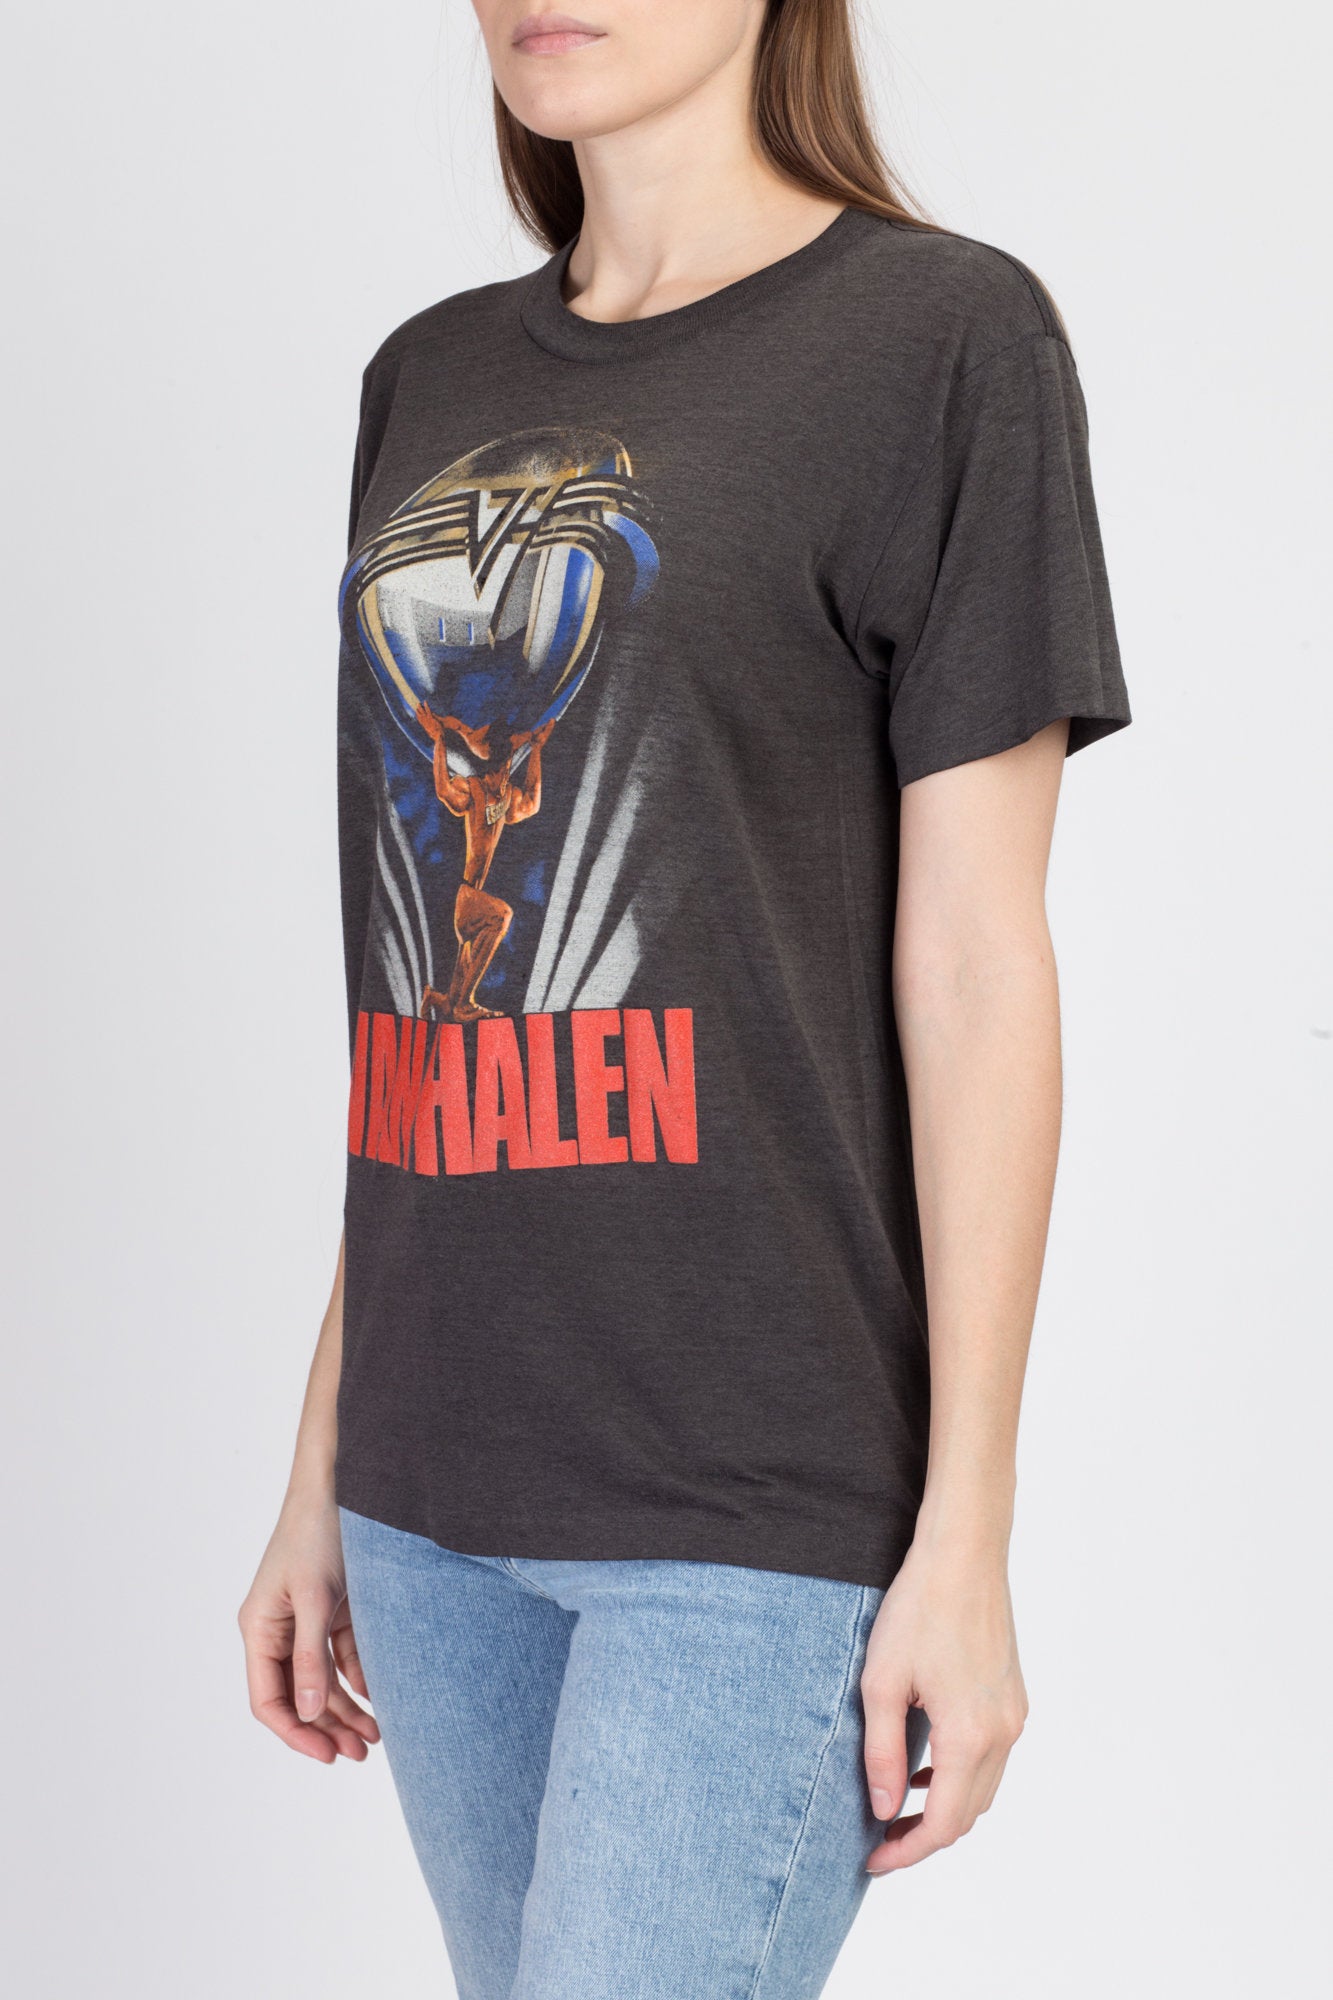 Vintage 80s Van Halen 5150 Tour T Shirt - Medium